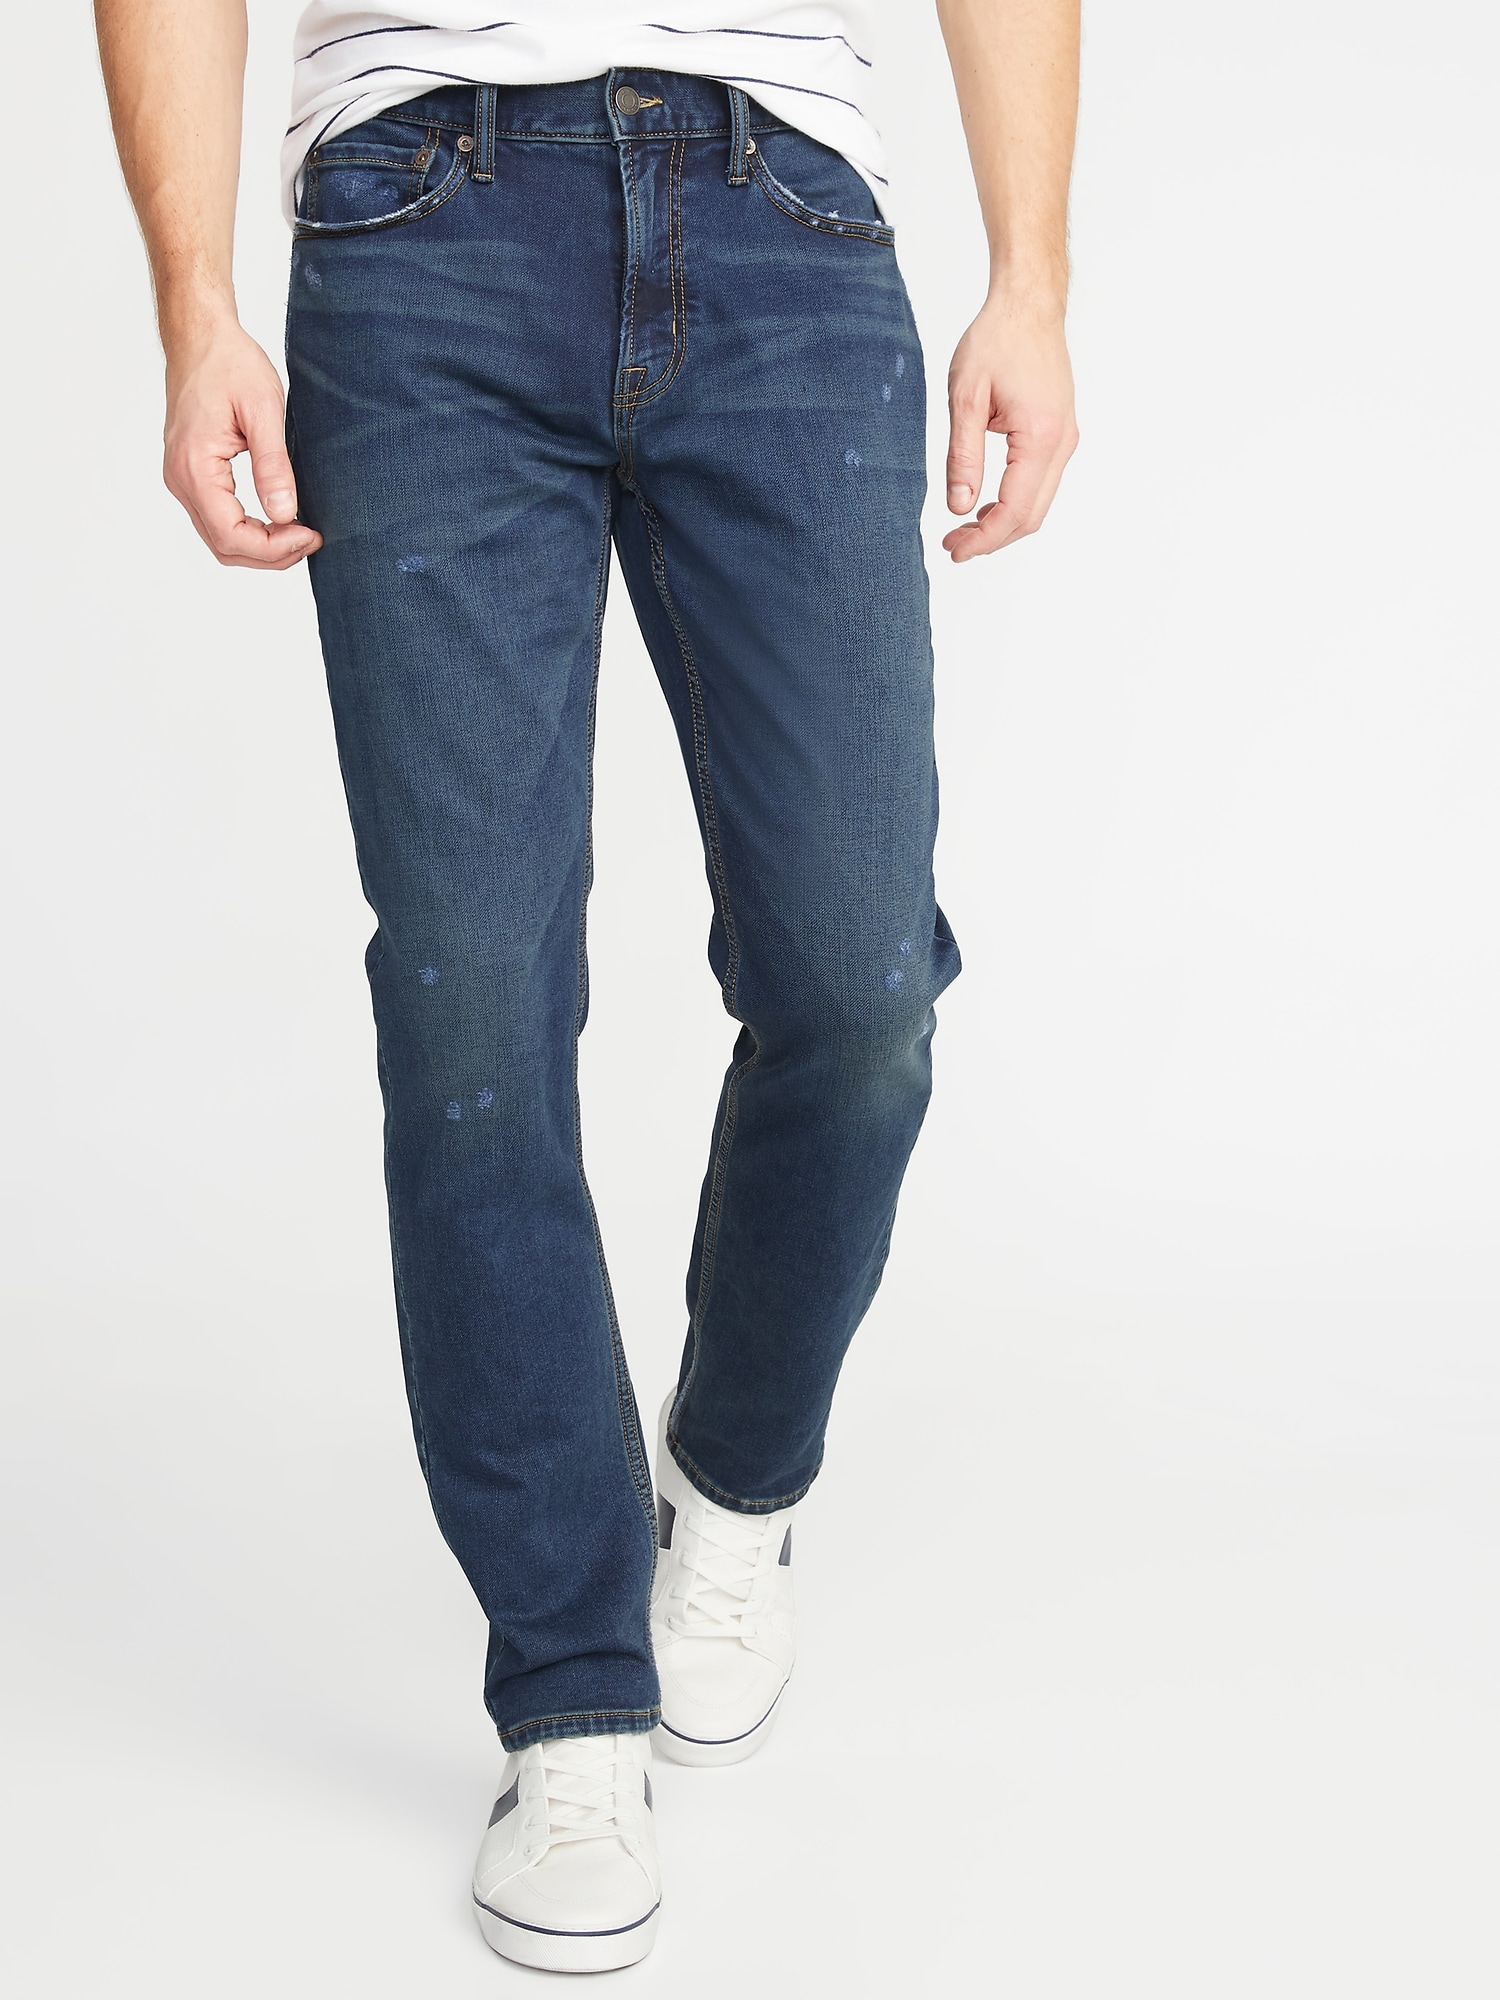 Slim 24/7 Built-In Flex Jeans For Men | Old Navy